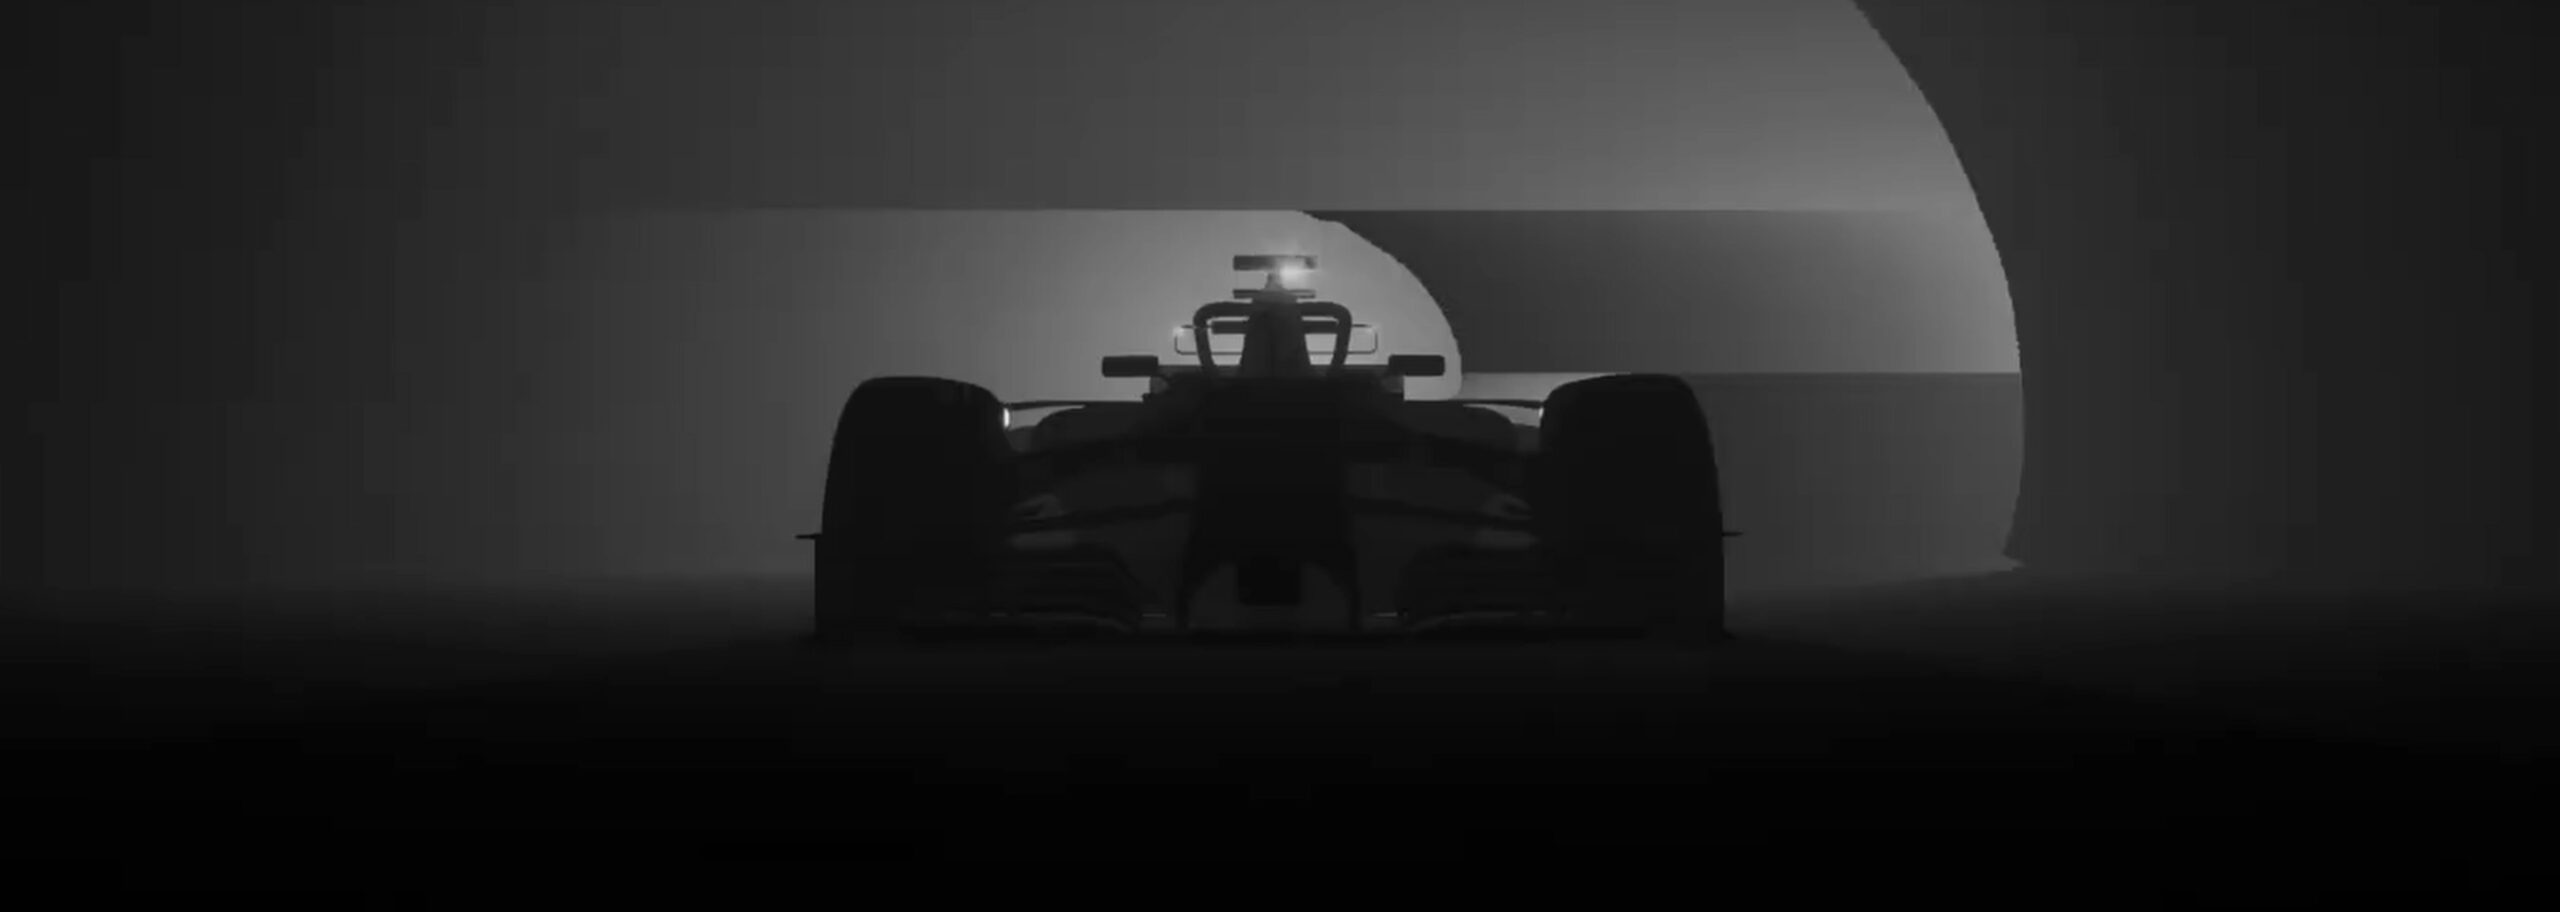 F1-Unreal-Engine-Stills_2.10.1-1